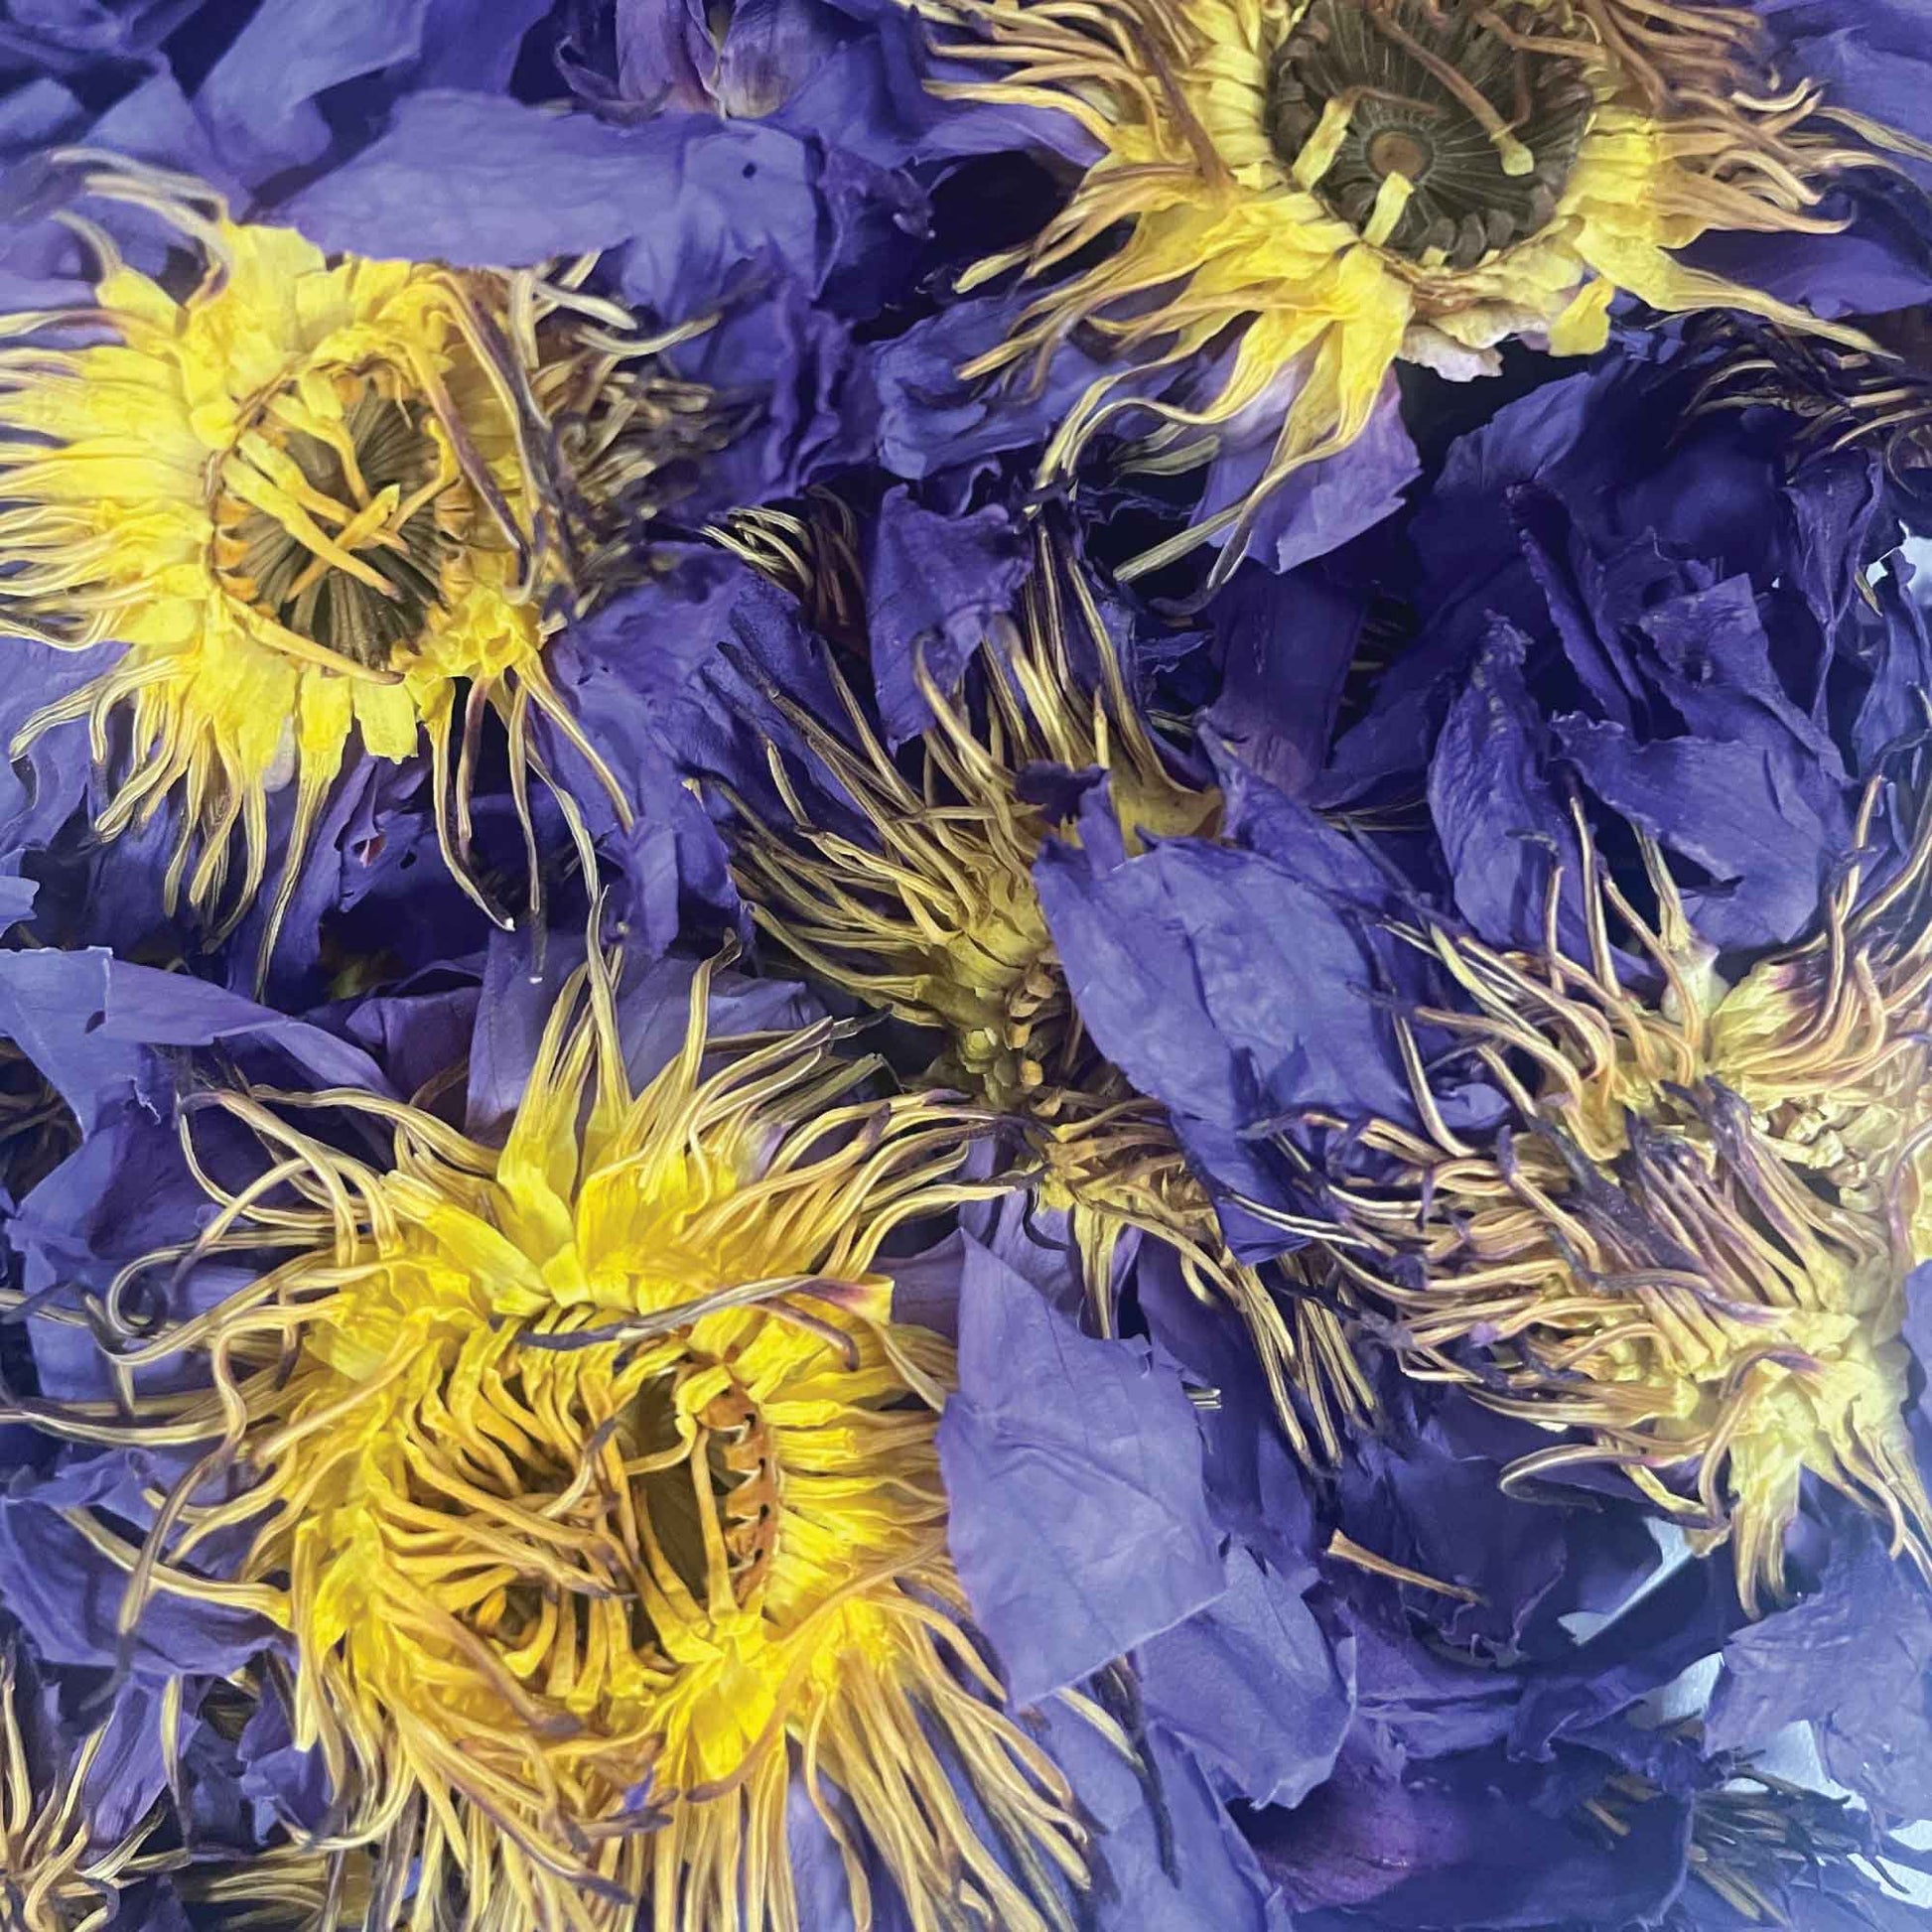 Orku 50g Dried Blue Lotus Flowers - Whole Open Lily Nymphaea Caerulea